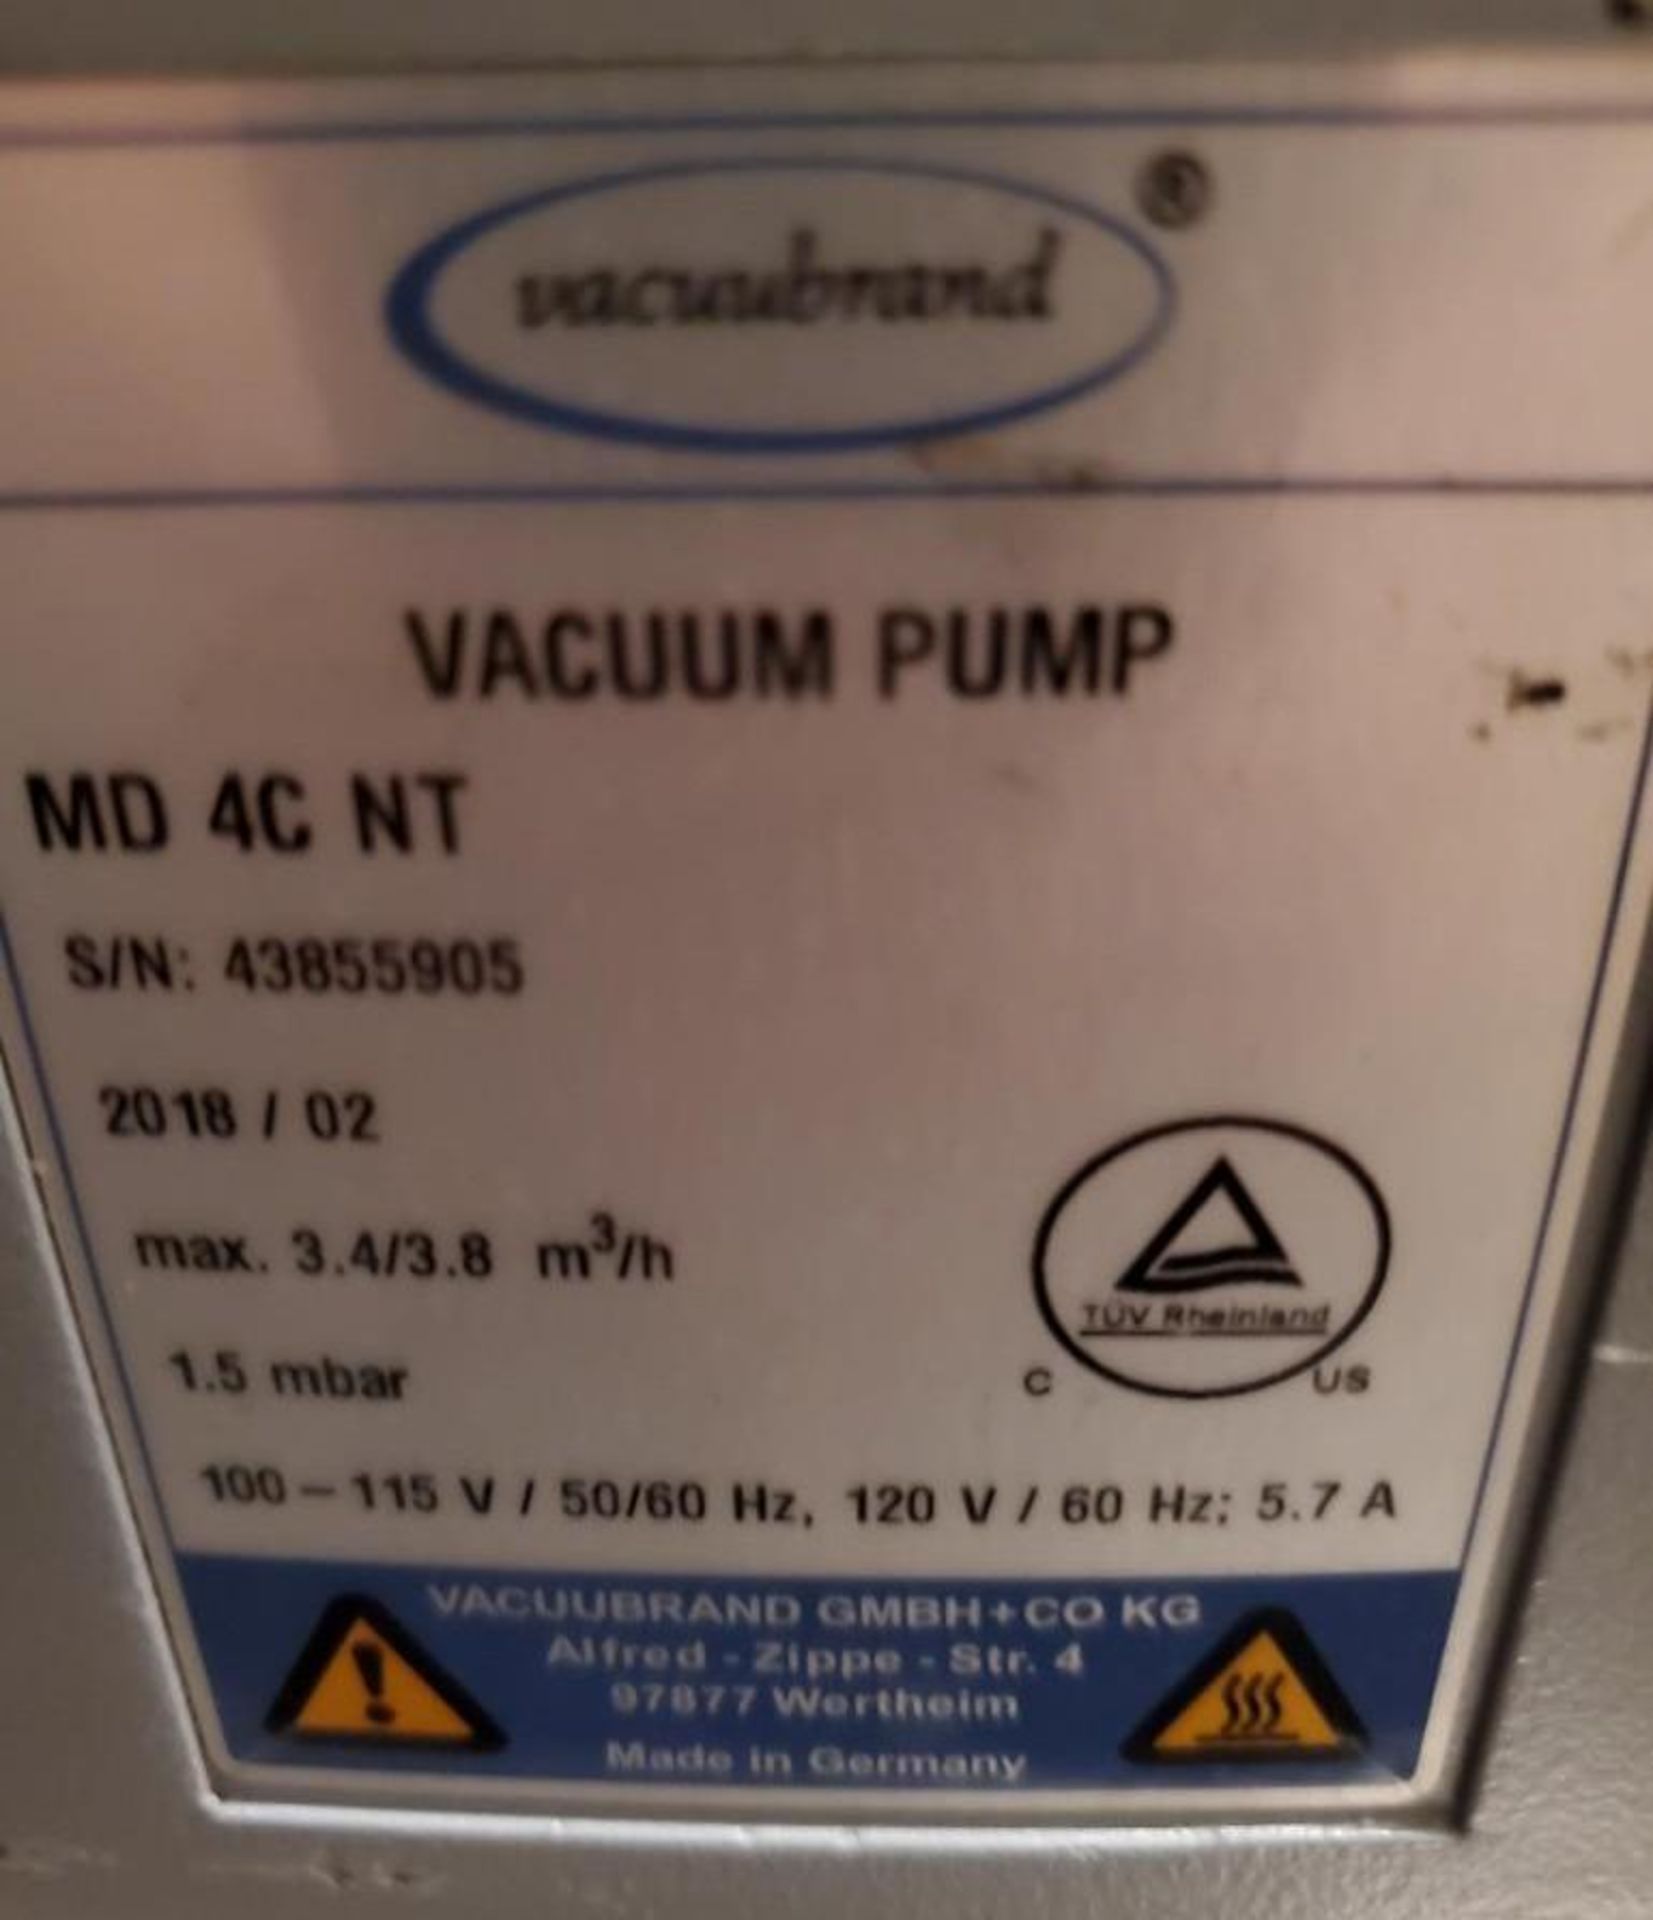 Vacuubrand model MD 4C NT Vacuum Pump - Image 4 of 5